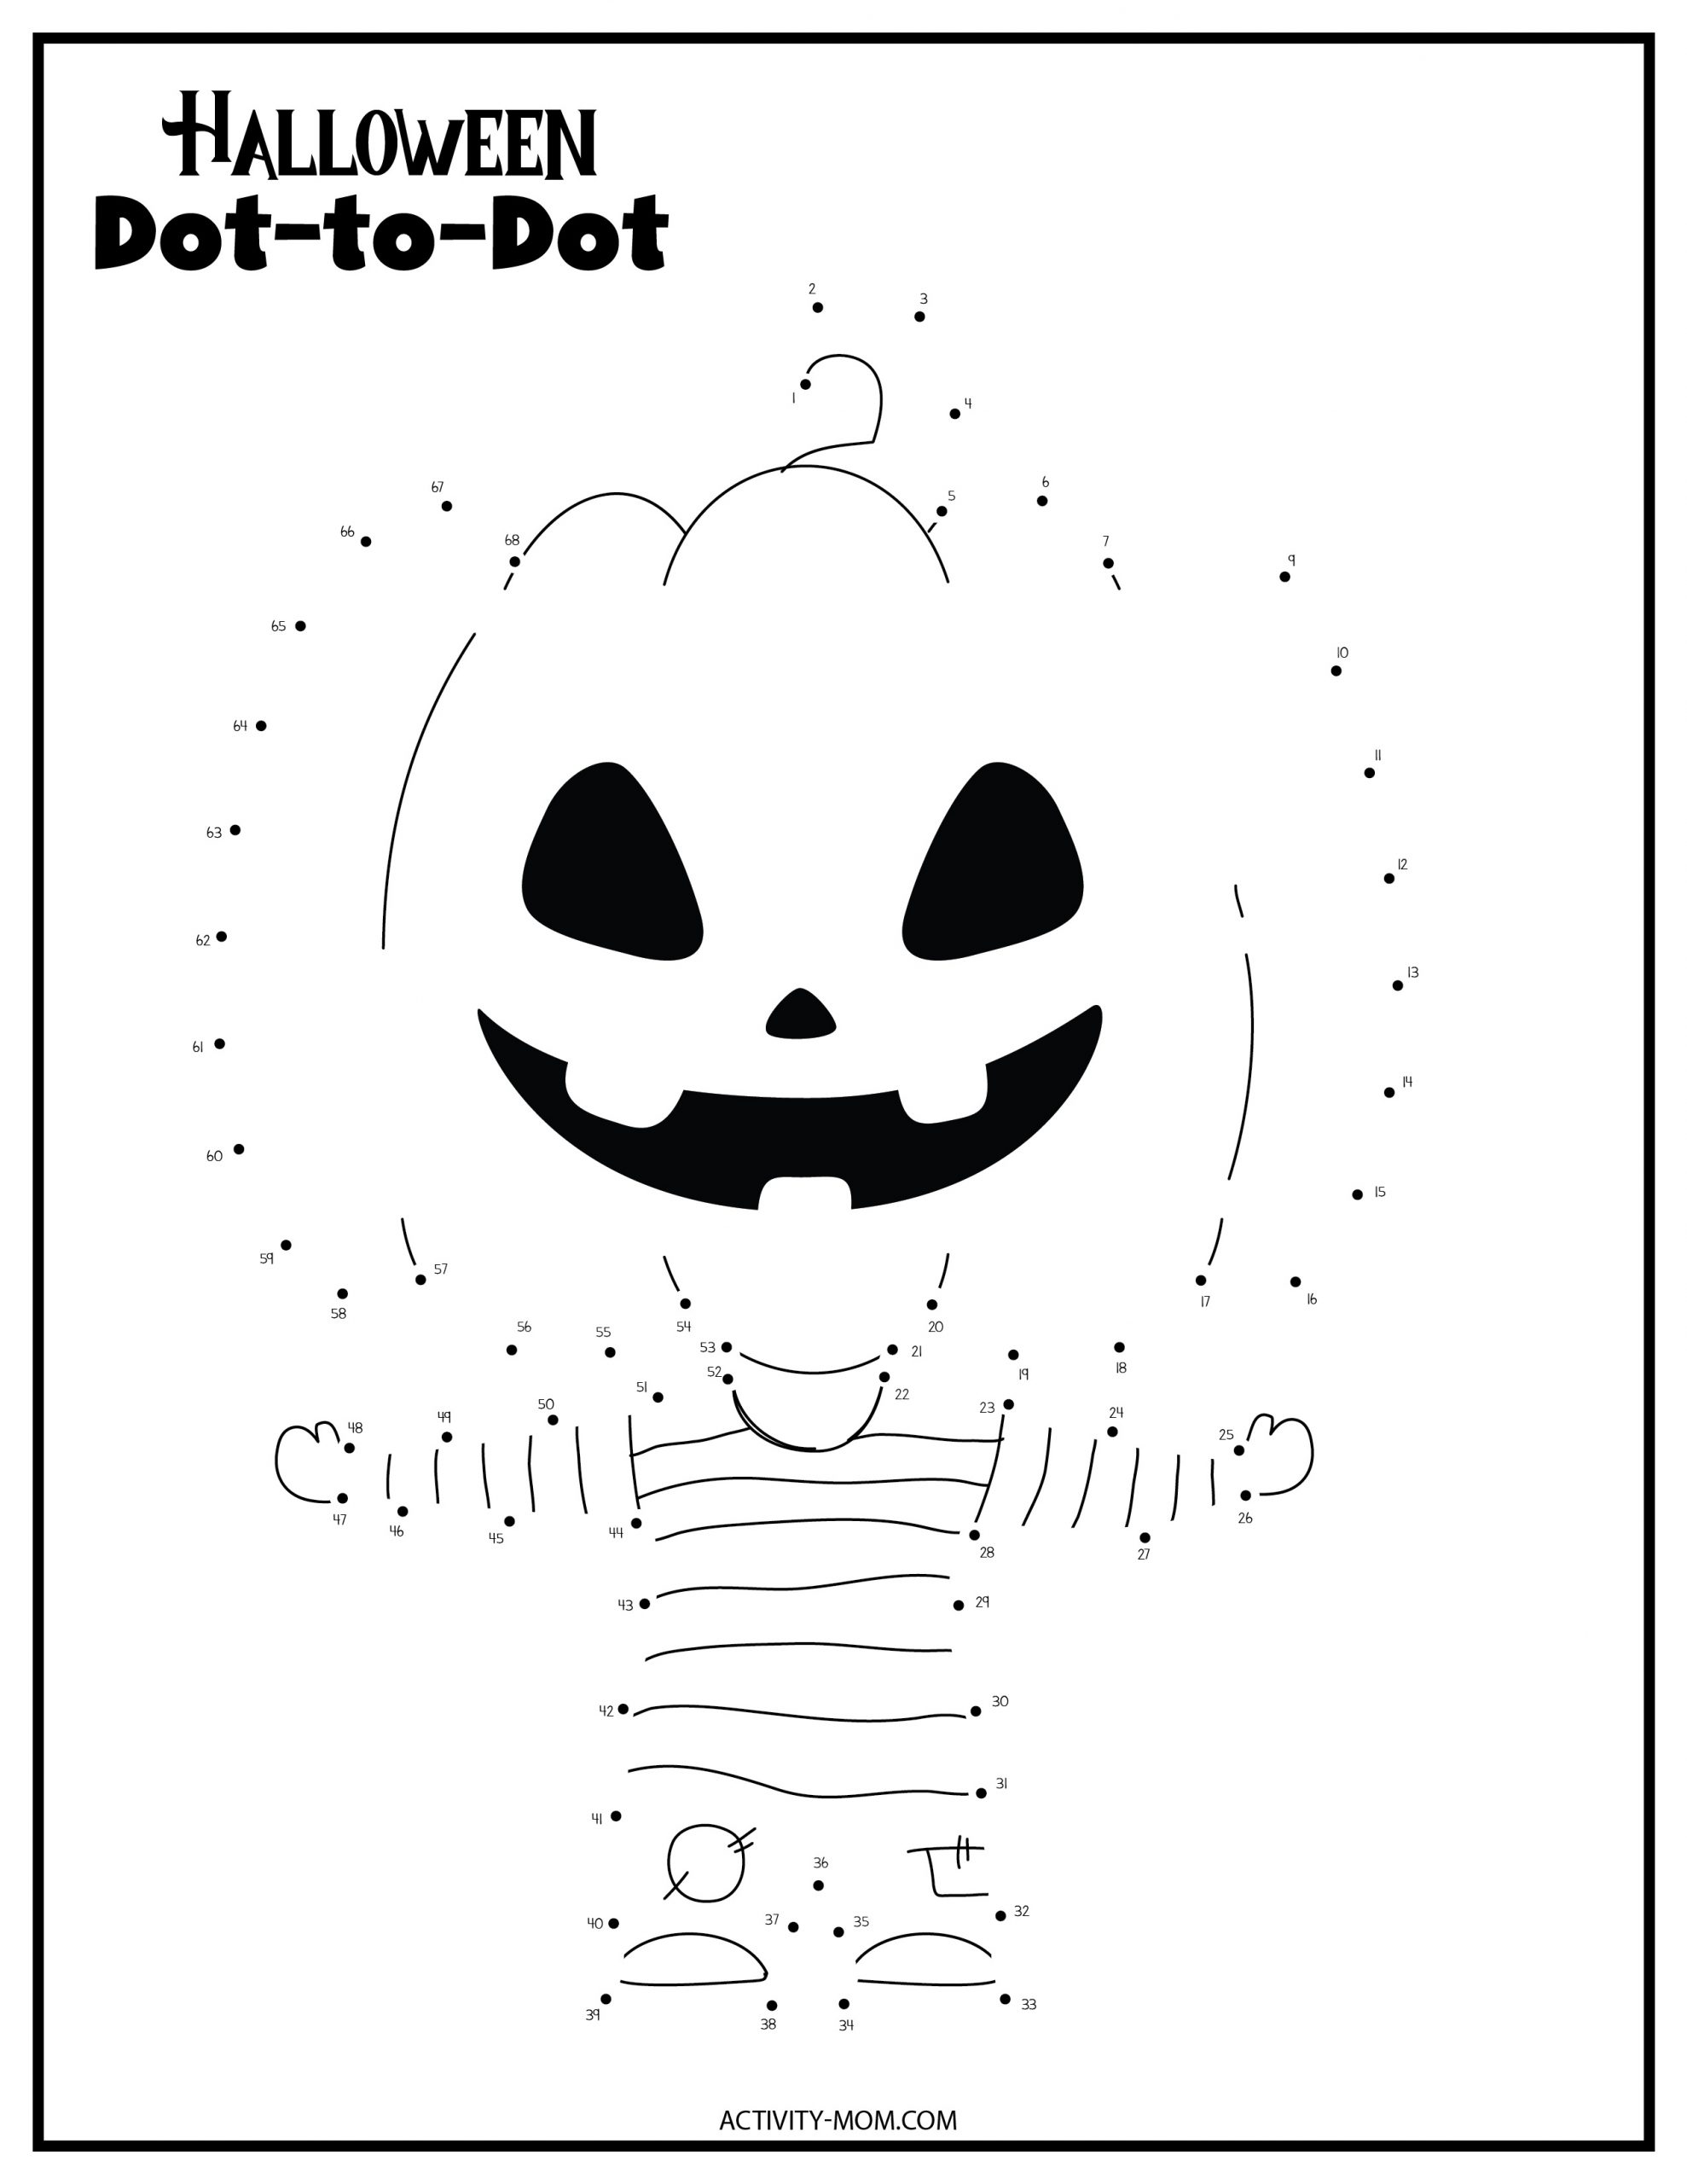 Halloween Dot to Dot Printables (free) - The Activity Mom